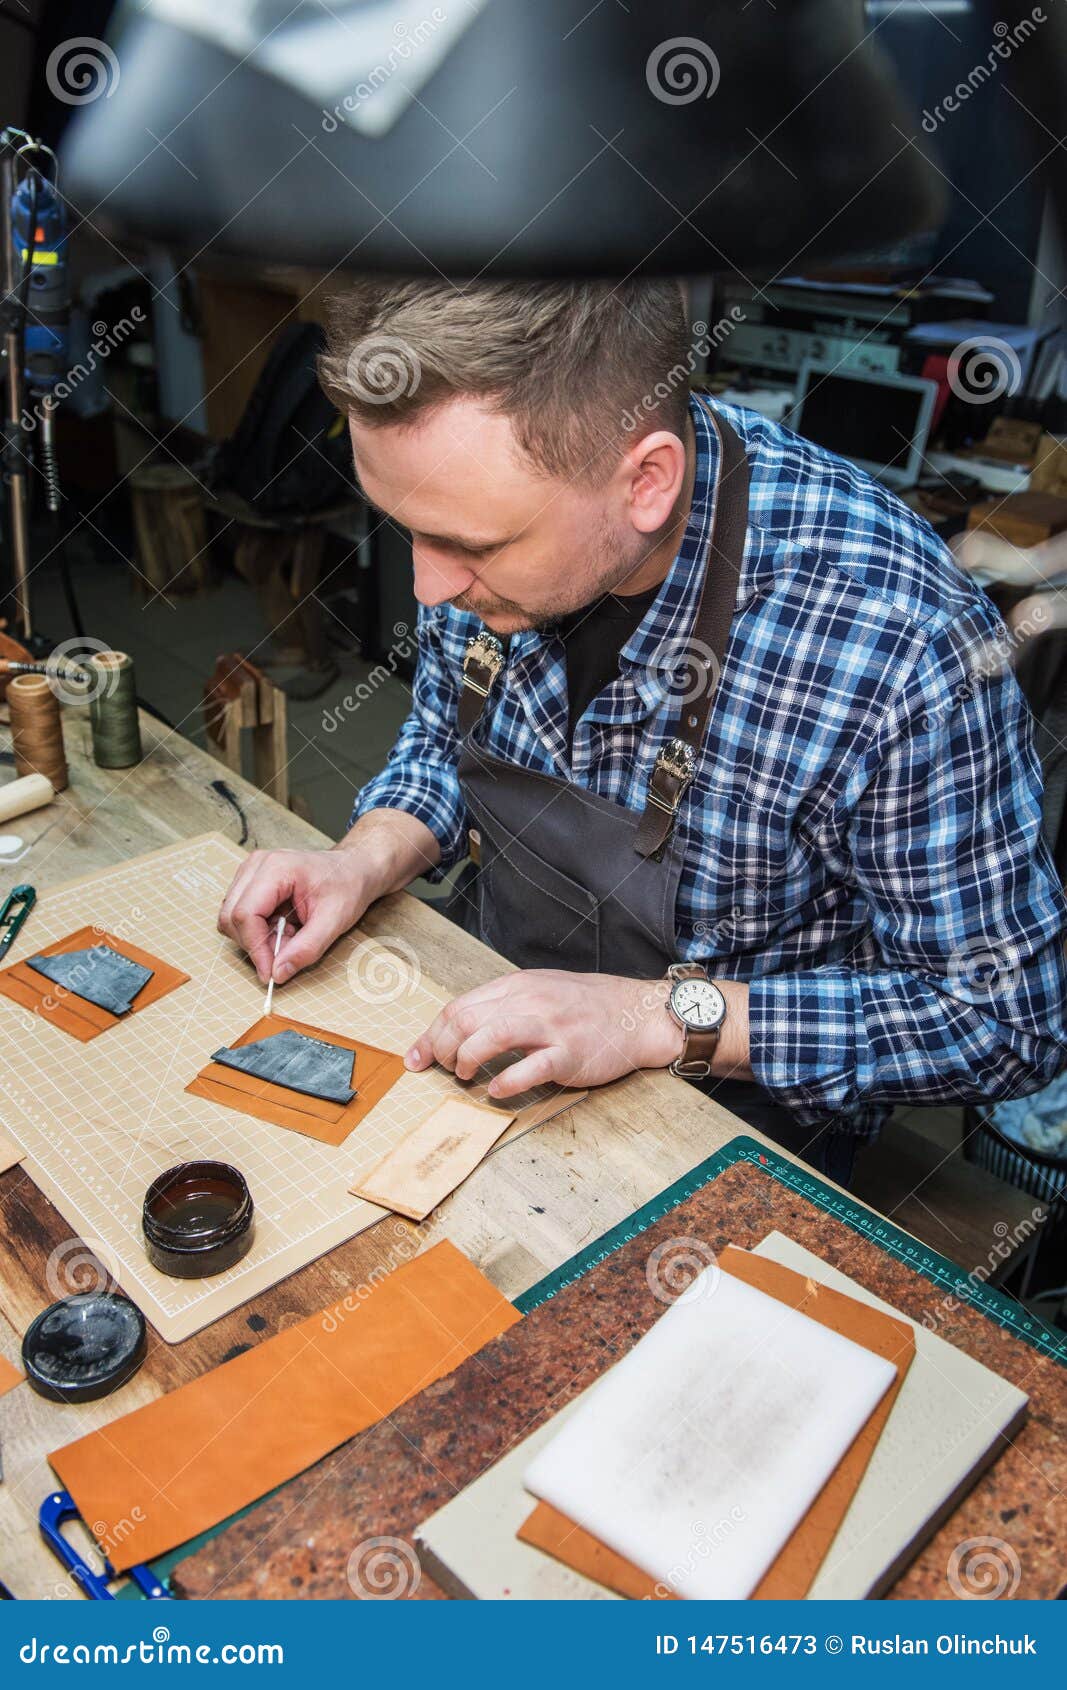 Celebrating Craftsmanship: The Revival Of Handmade Home Goods